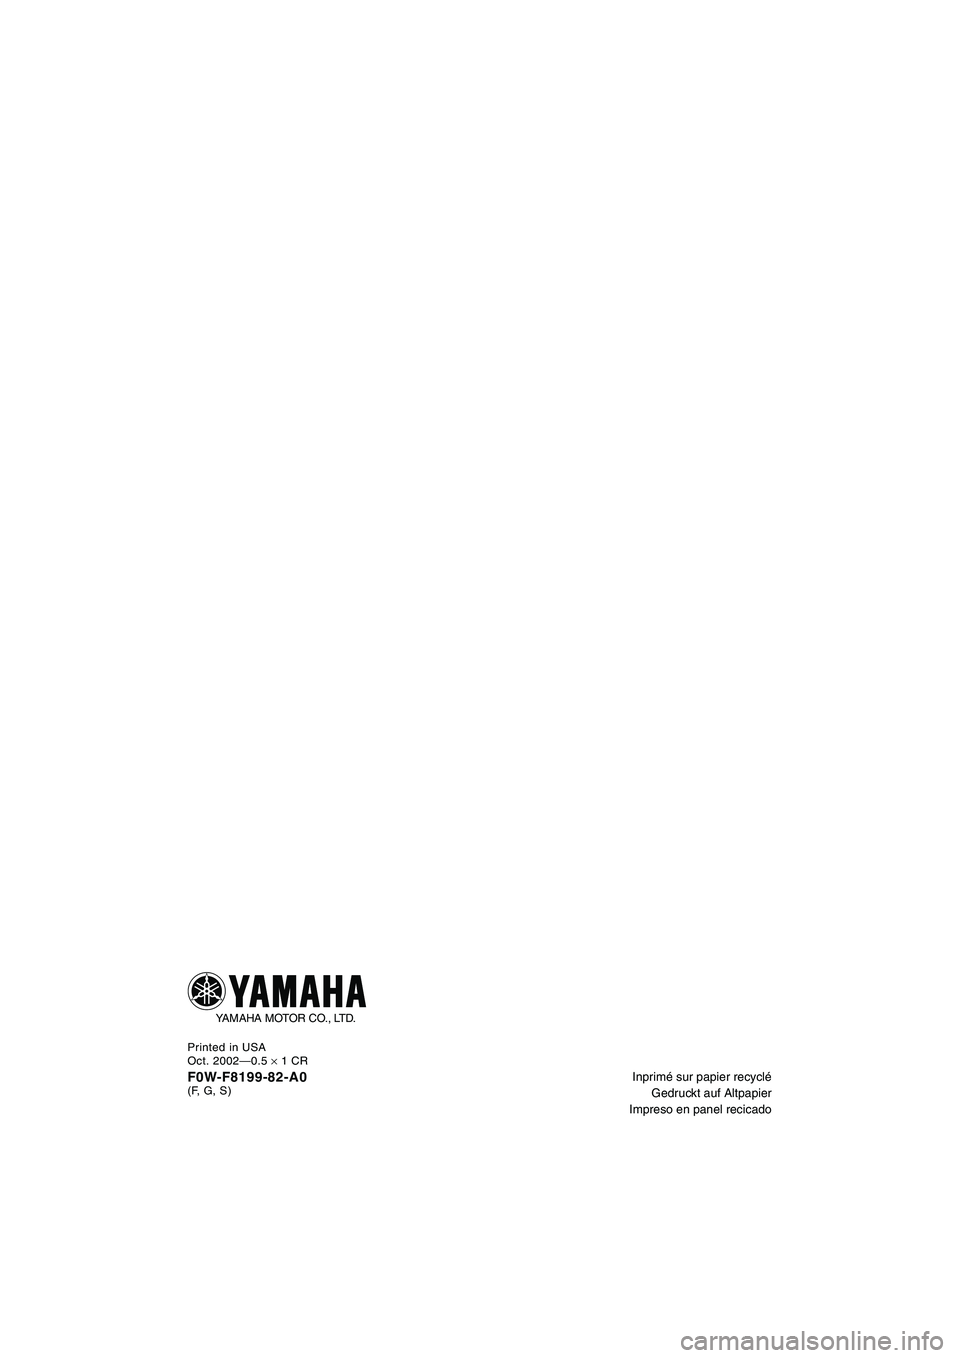 YAMAHA GP800R 2003  Manuale de Empleo (in Spanish) Inprimé sur papier recyclé
Gedruckt auf Altpapier
Impreso en panel recicado
Printed in USA
Oct. 2002—0.5 
× 1 CR
F0W-F8199-82-A0(F, G, S)
YAMAHA MOTOR CO., LTD.
UF0W82A0.book  Page 1  Monday, Sep